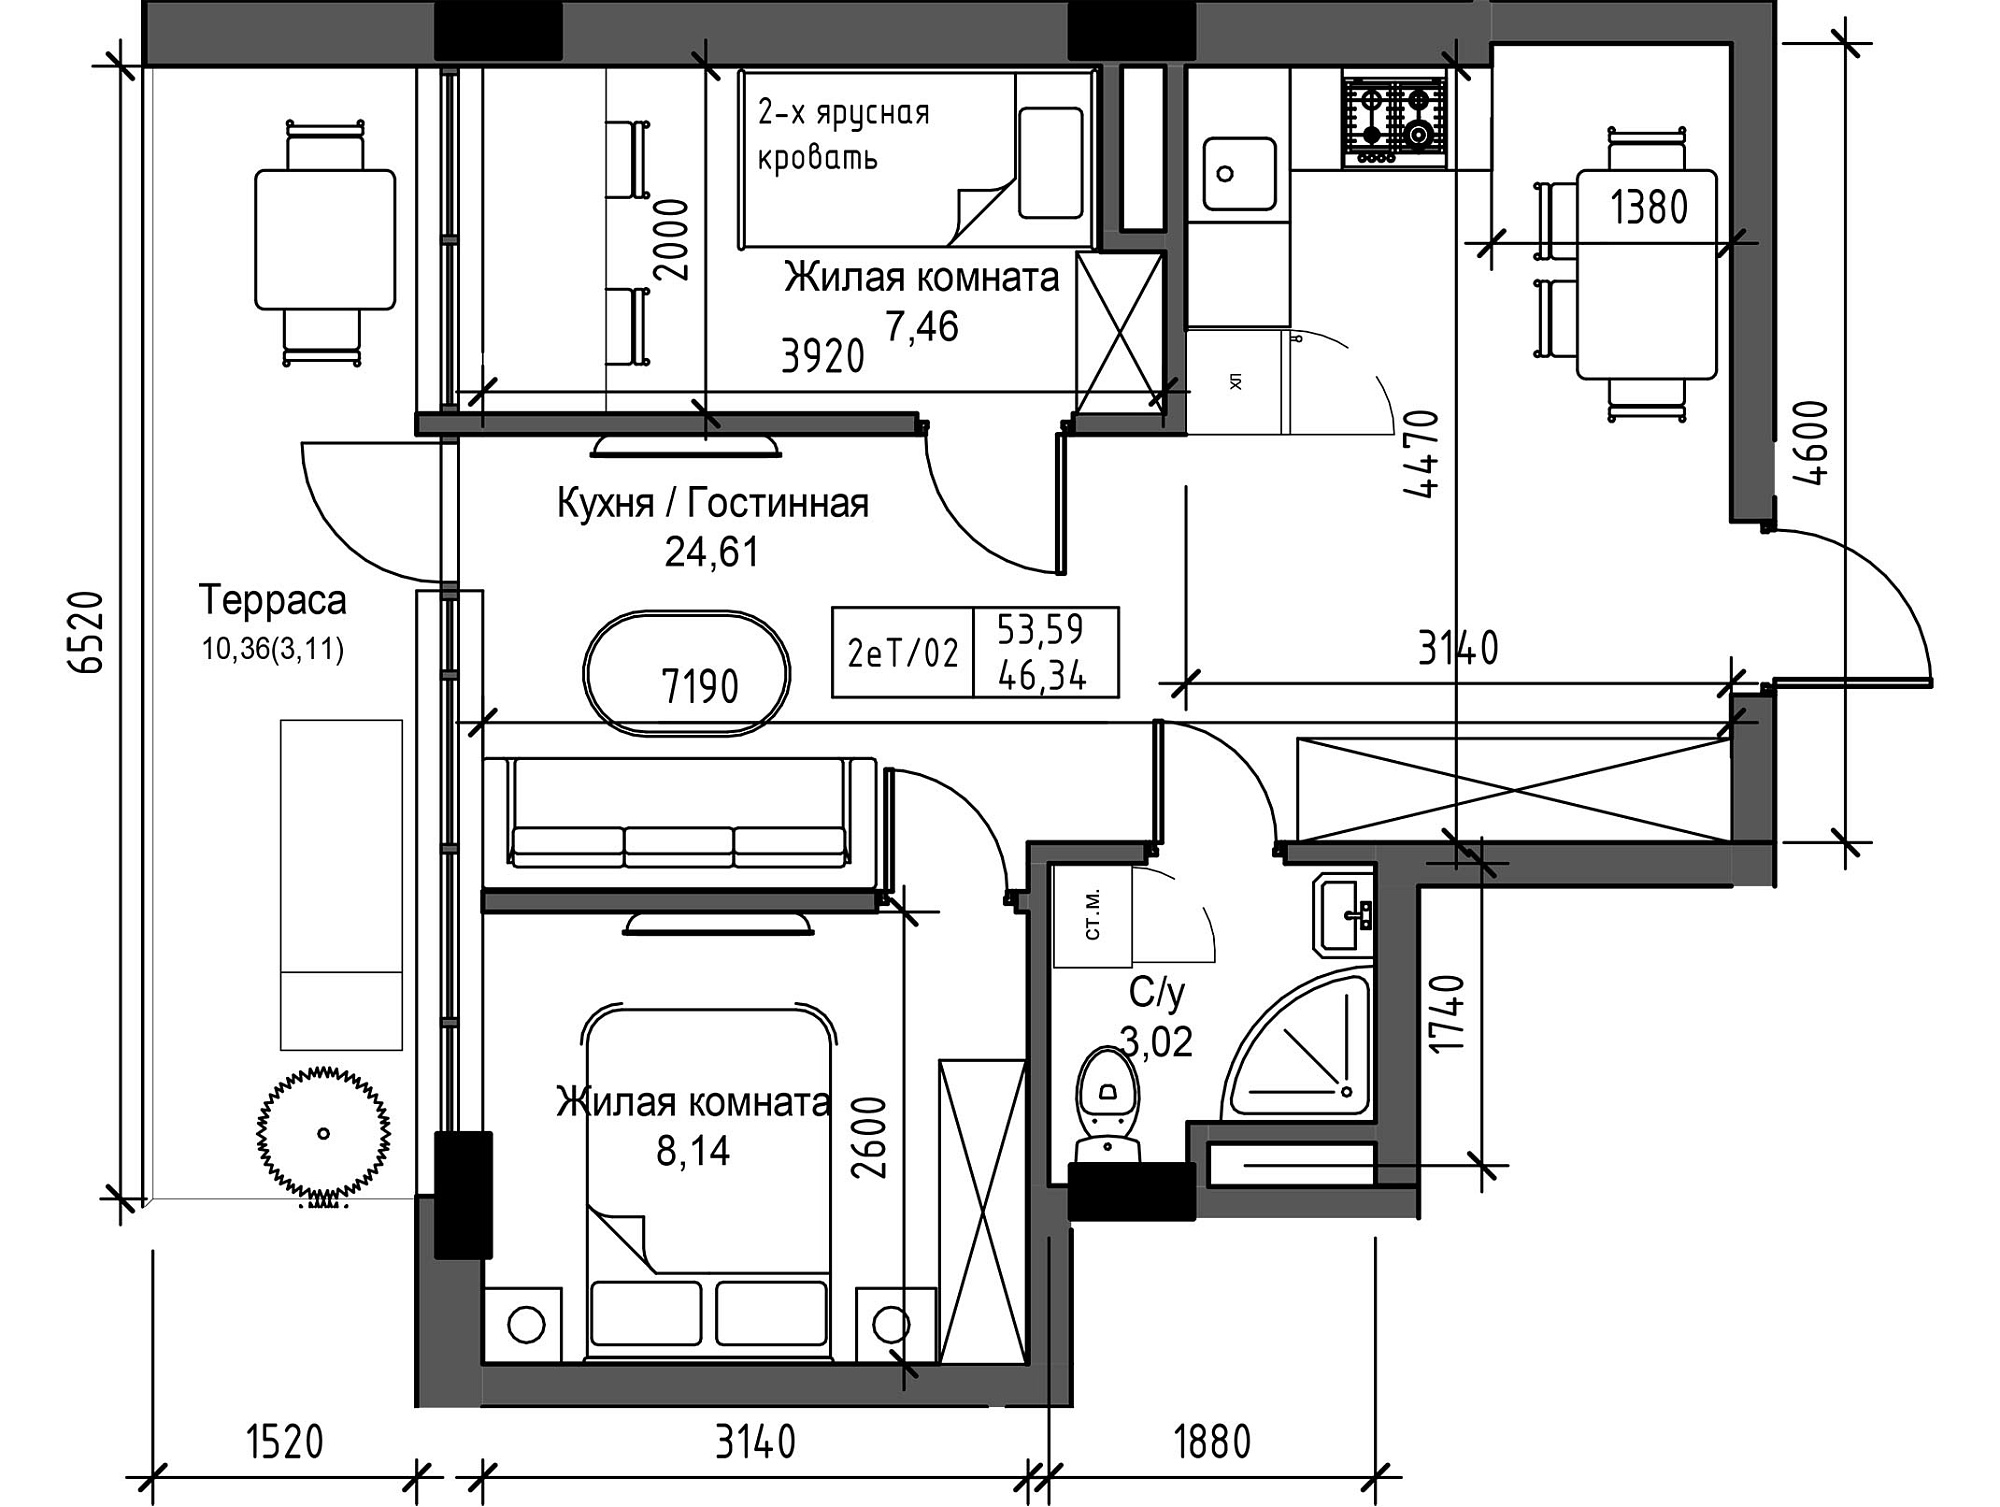 Планування 2-к квартира площею 43.32м2, UM-003-10/0108.